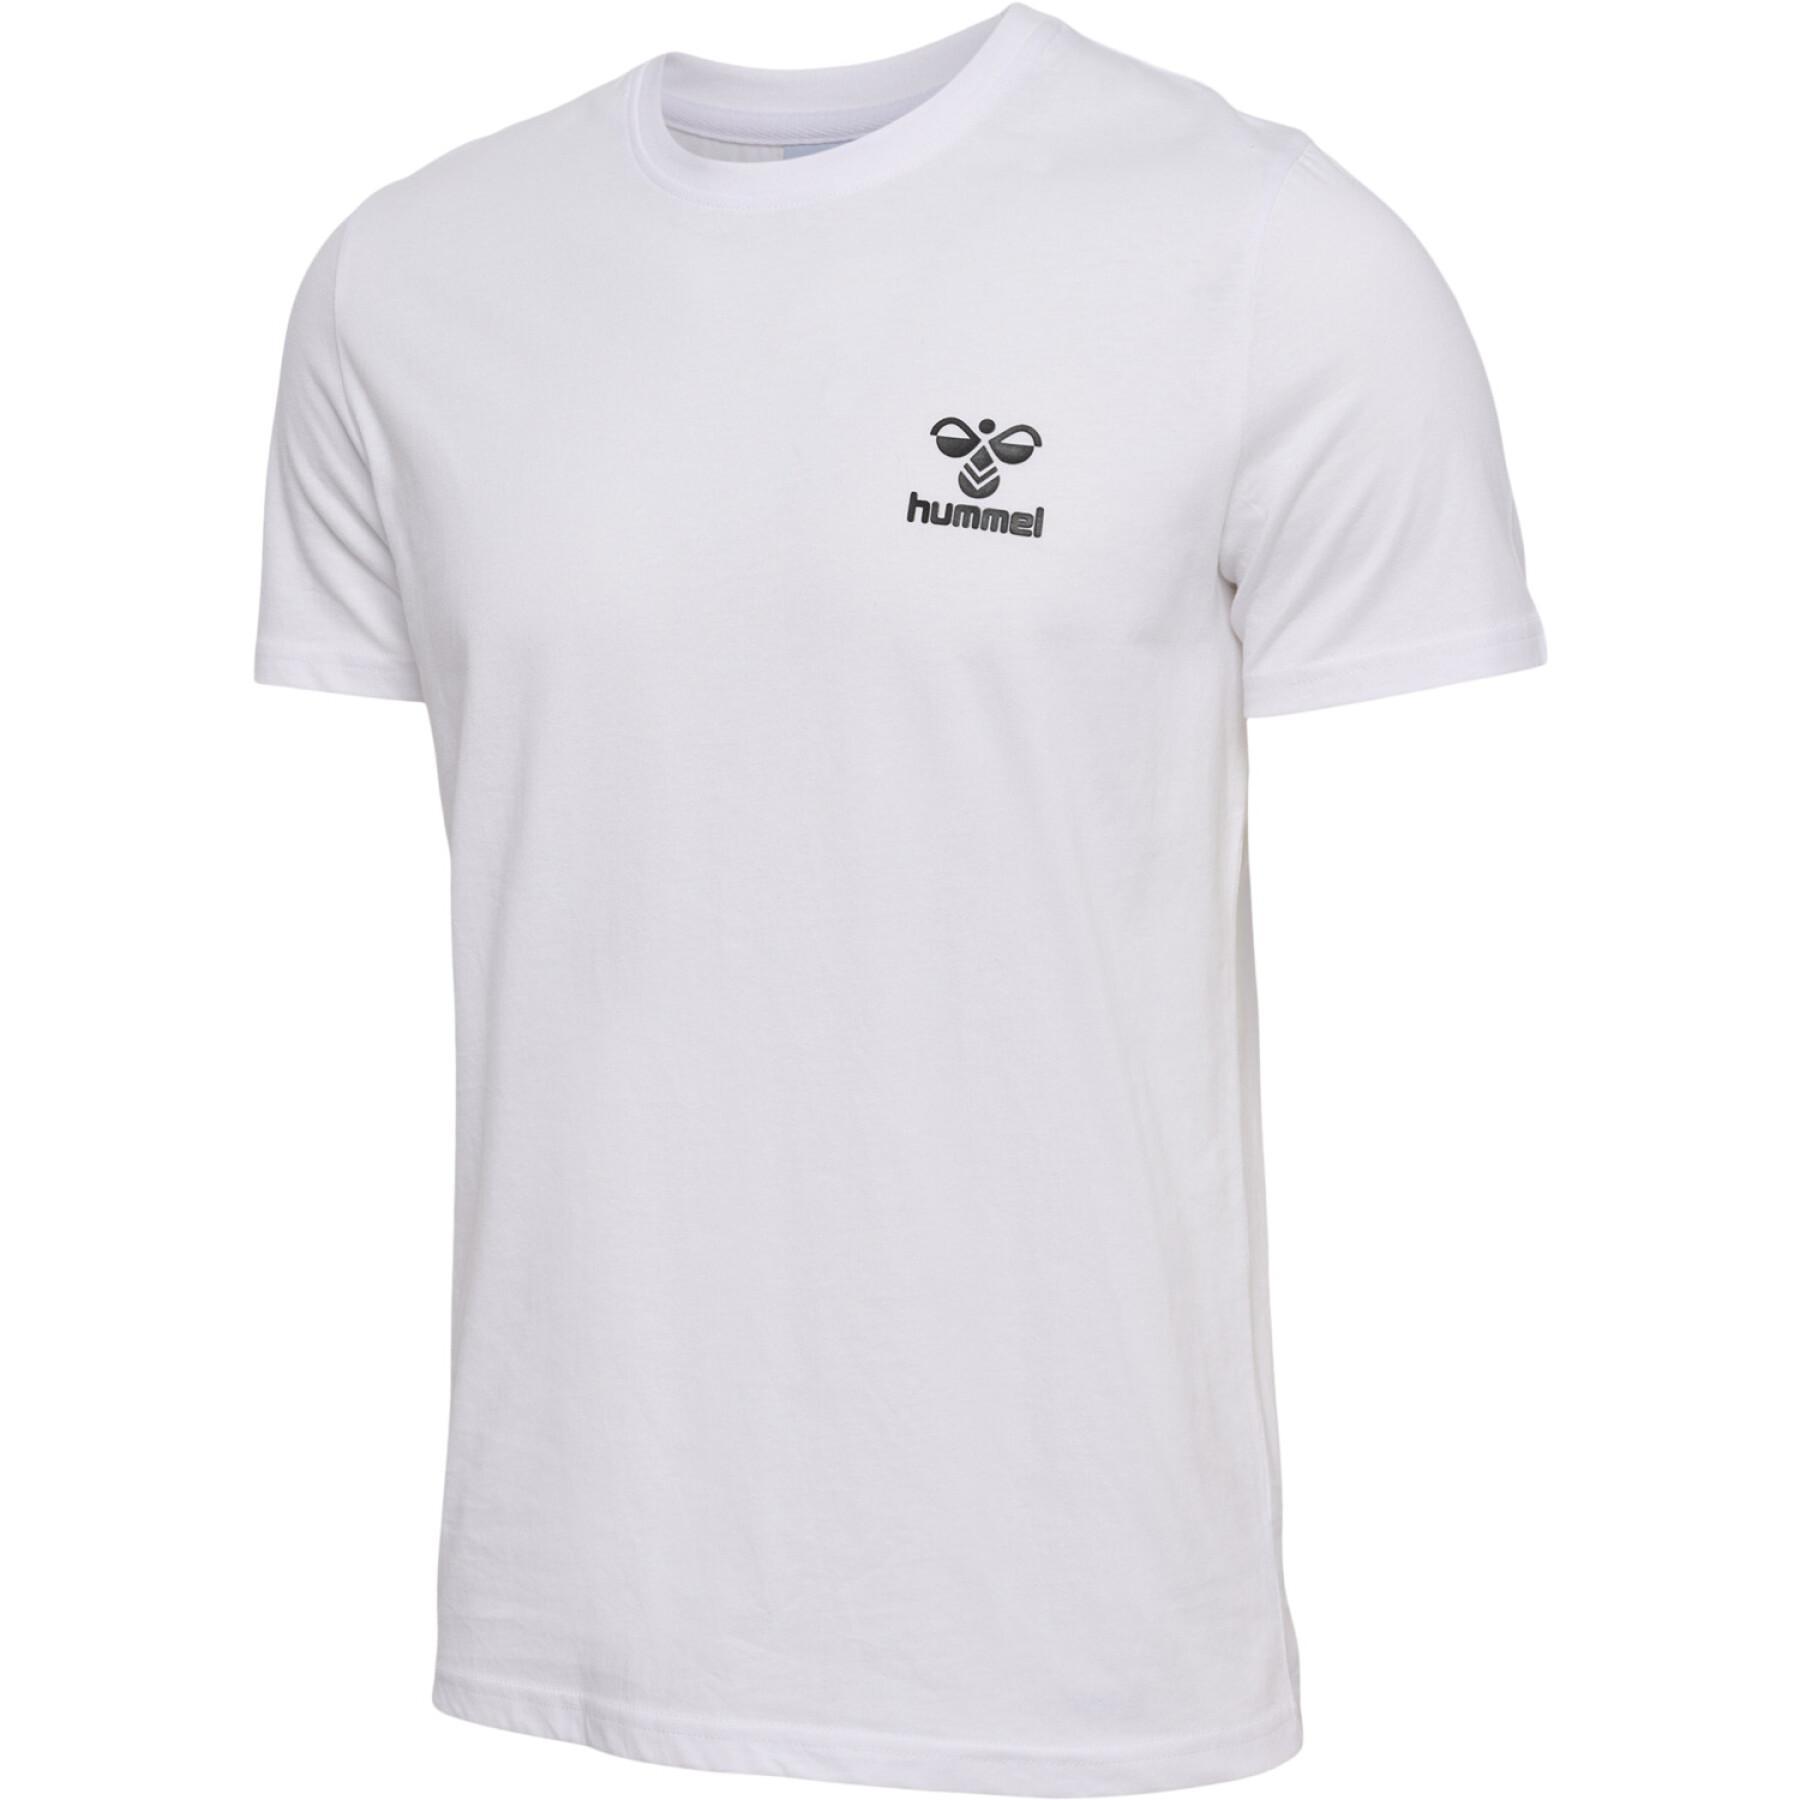 T-shirt Hummel Icons - Hummel - Brands - Lifestyle